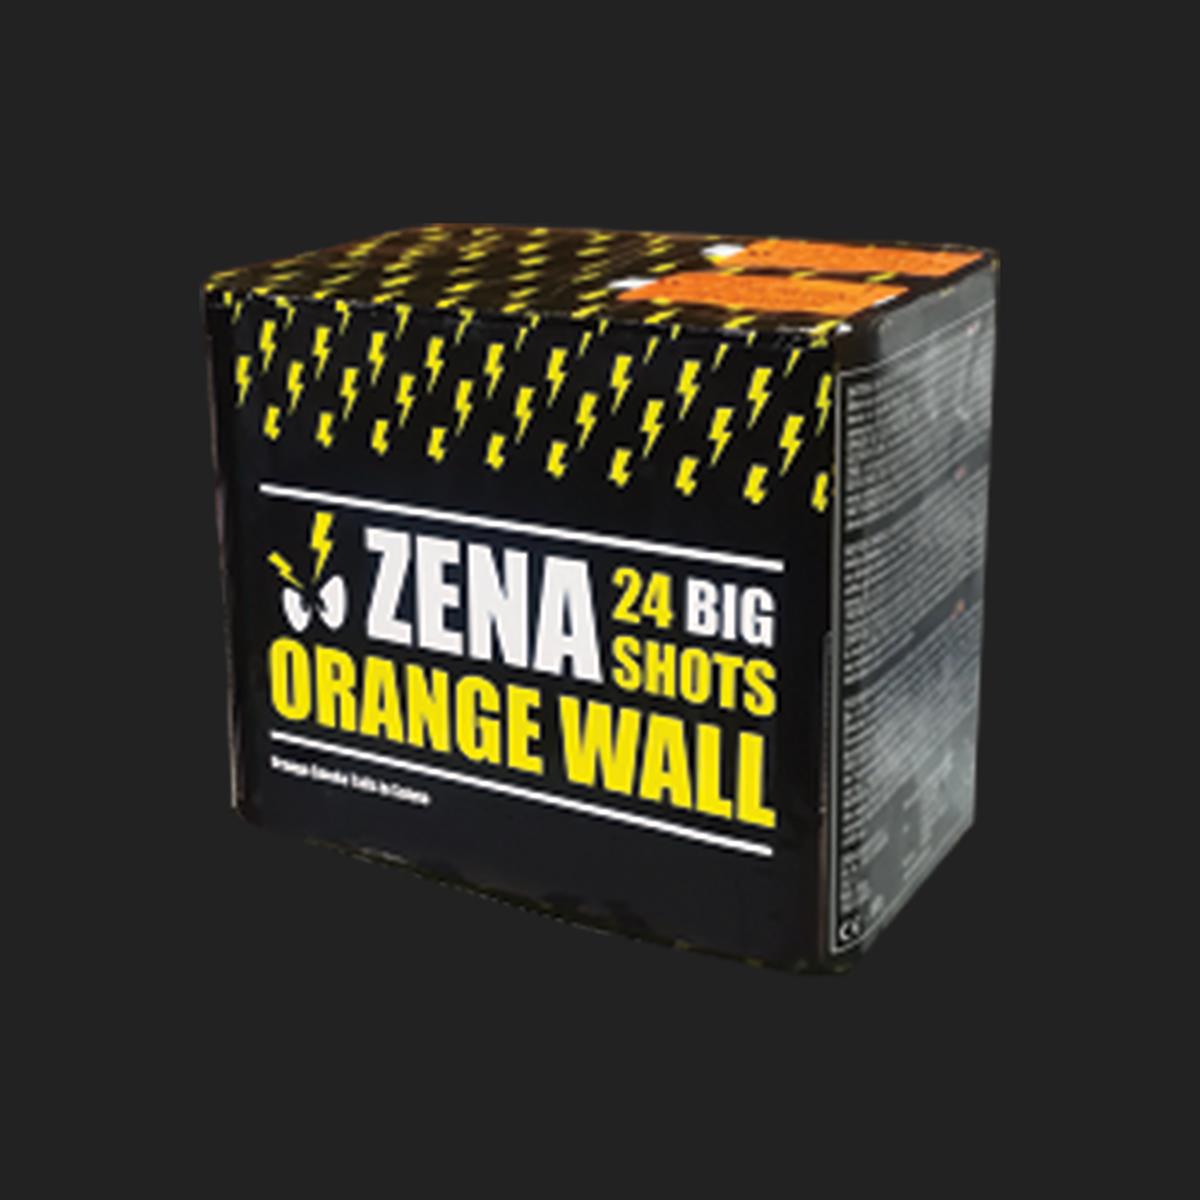 ZENA ORANGE WALL - 24 SHOTS